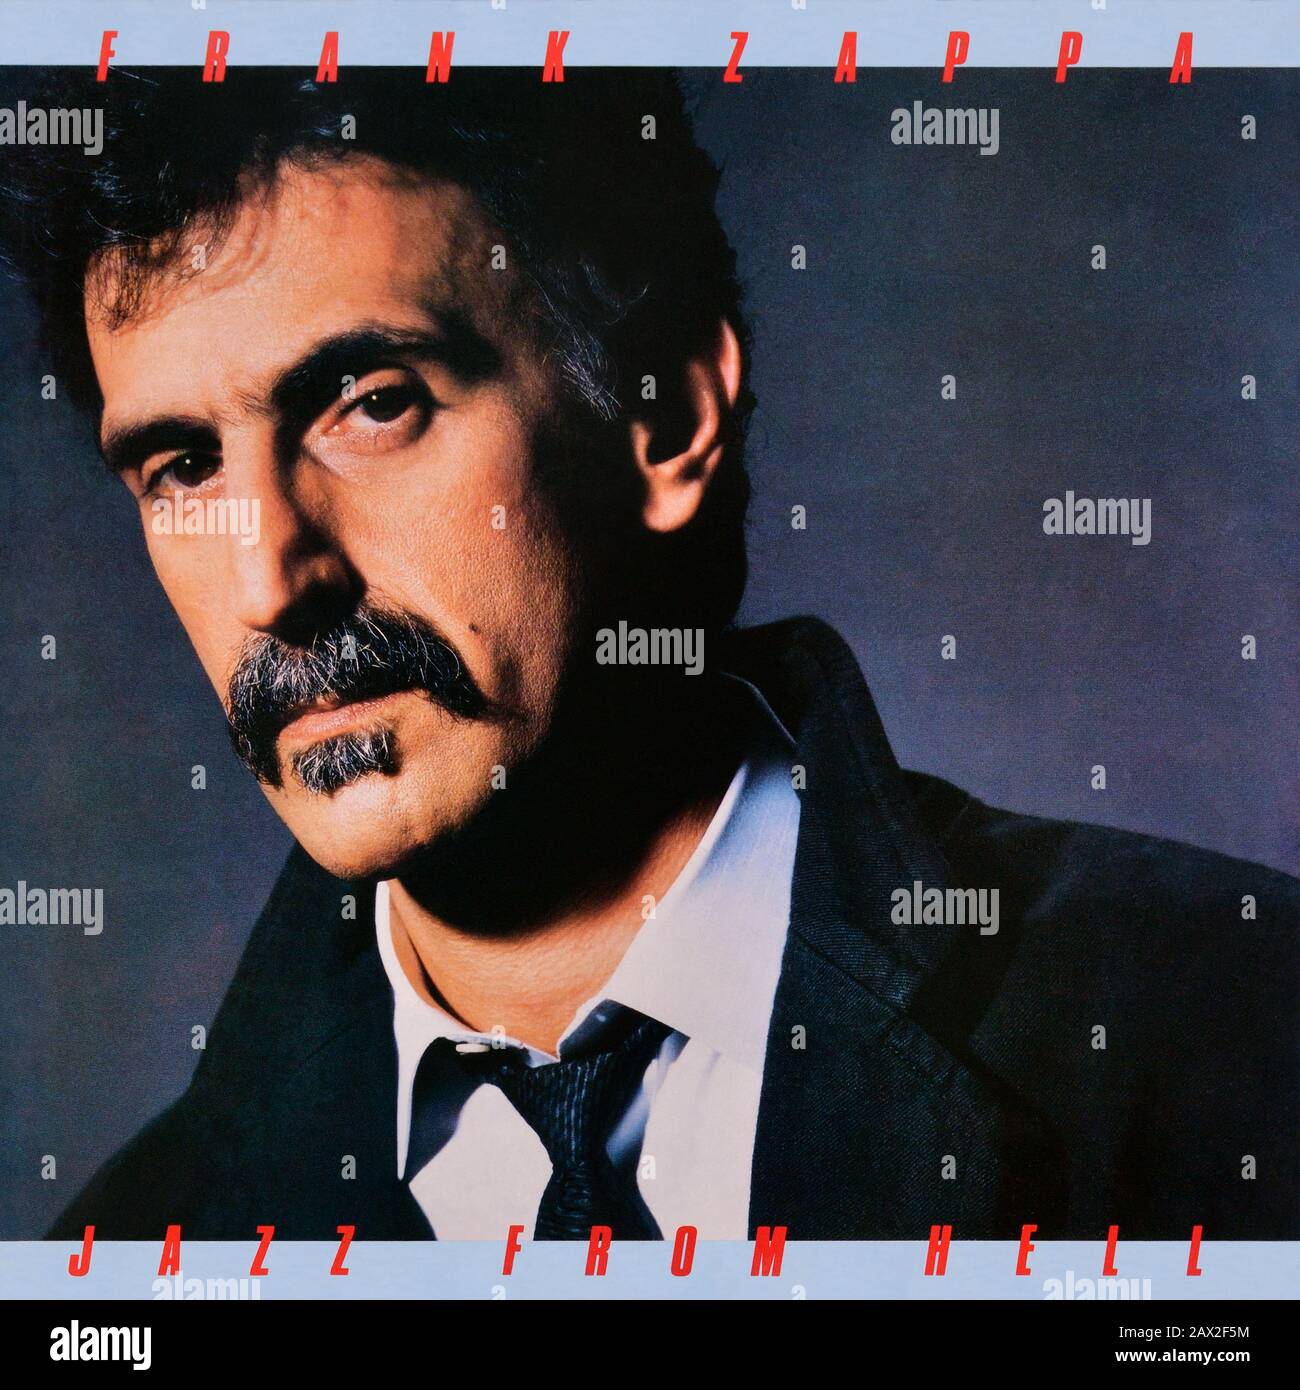 Frank Zappa - original vinyl album cover - Jazz From Hell - 1986 Stock Photo